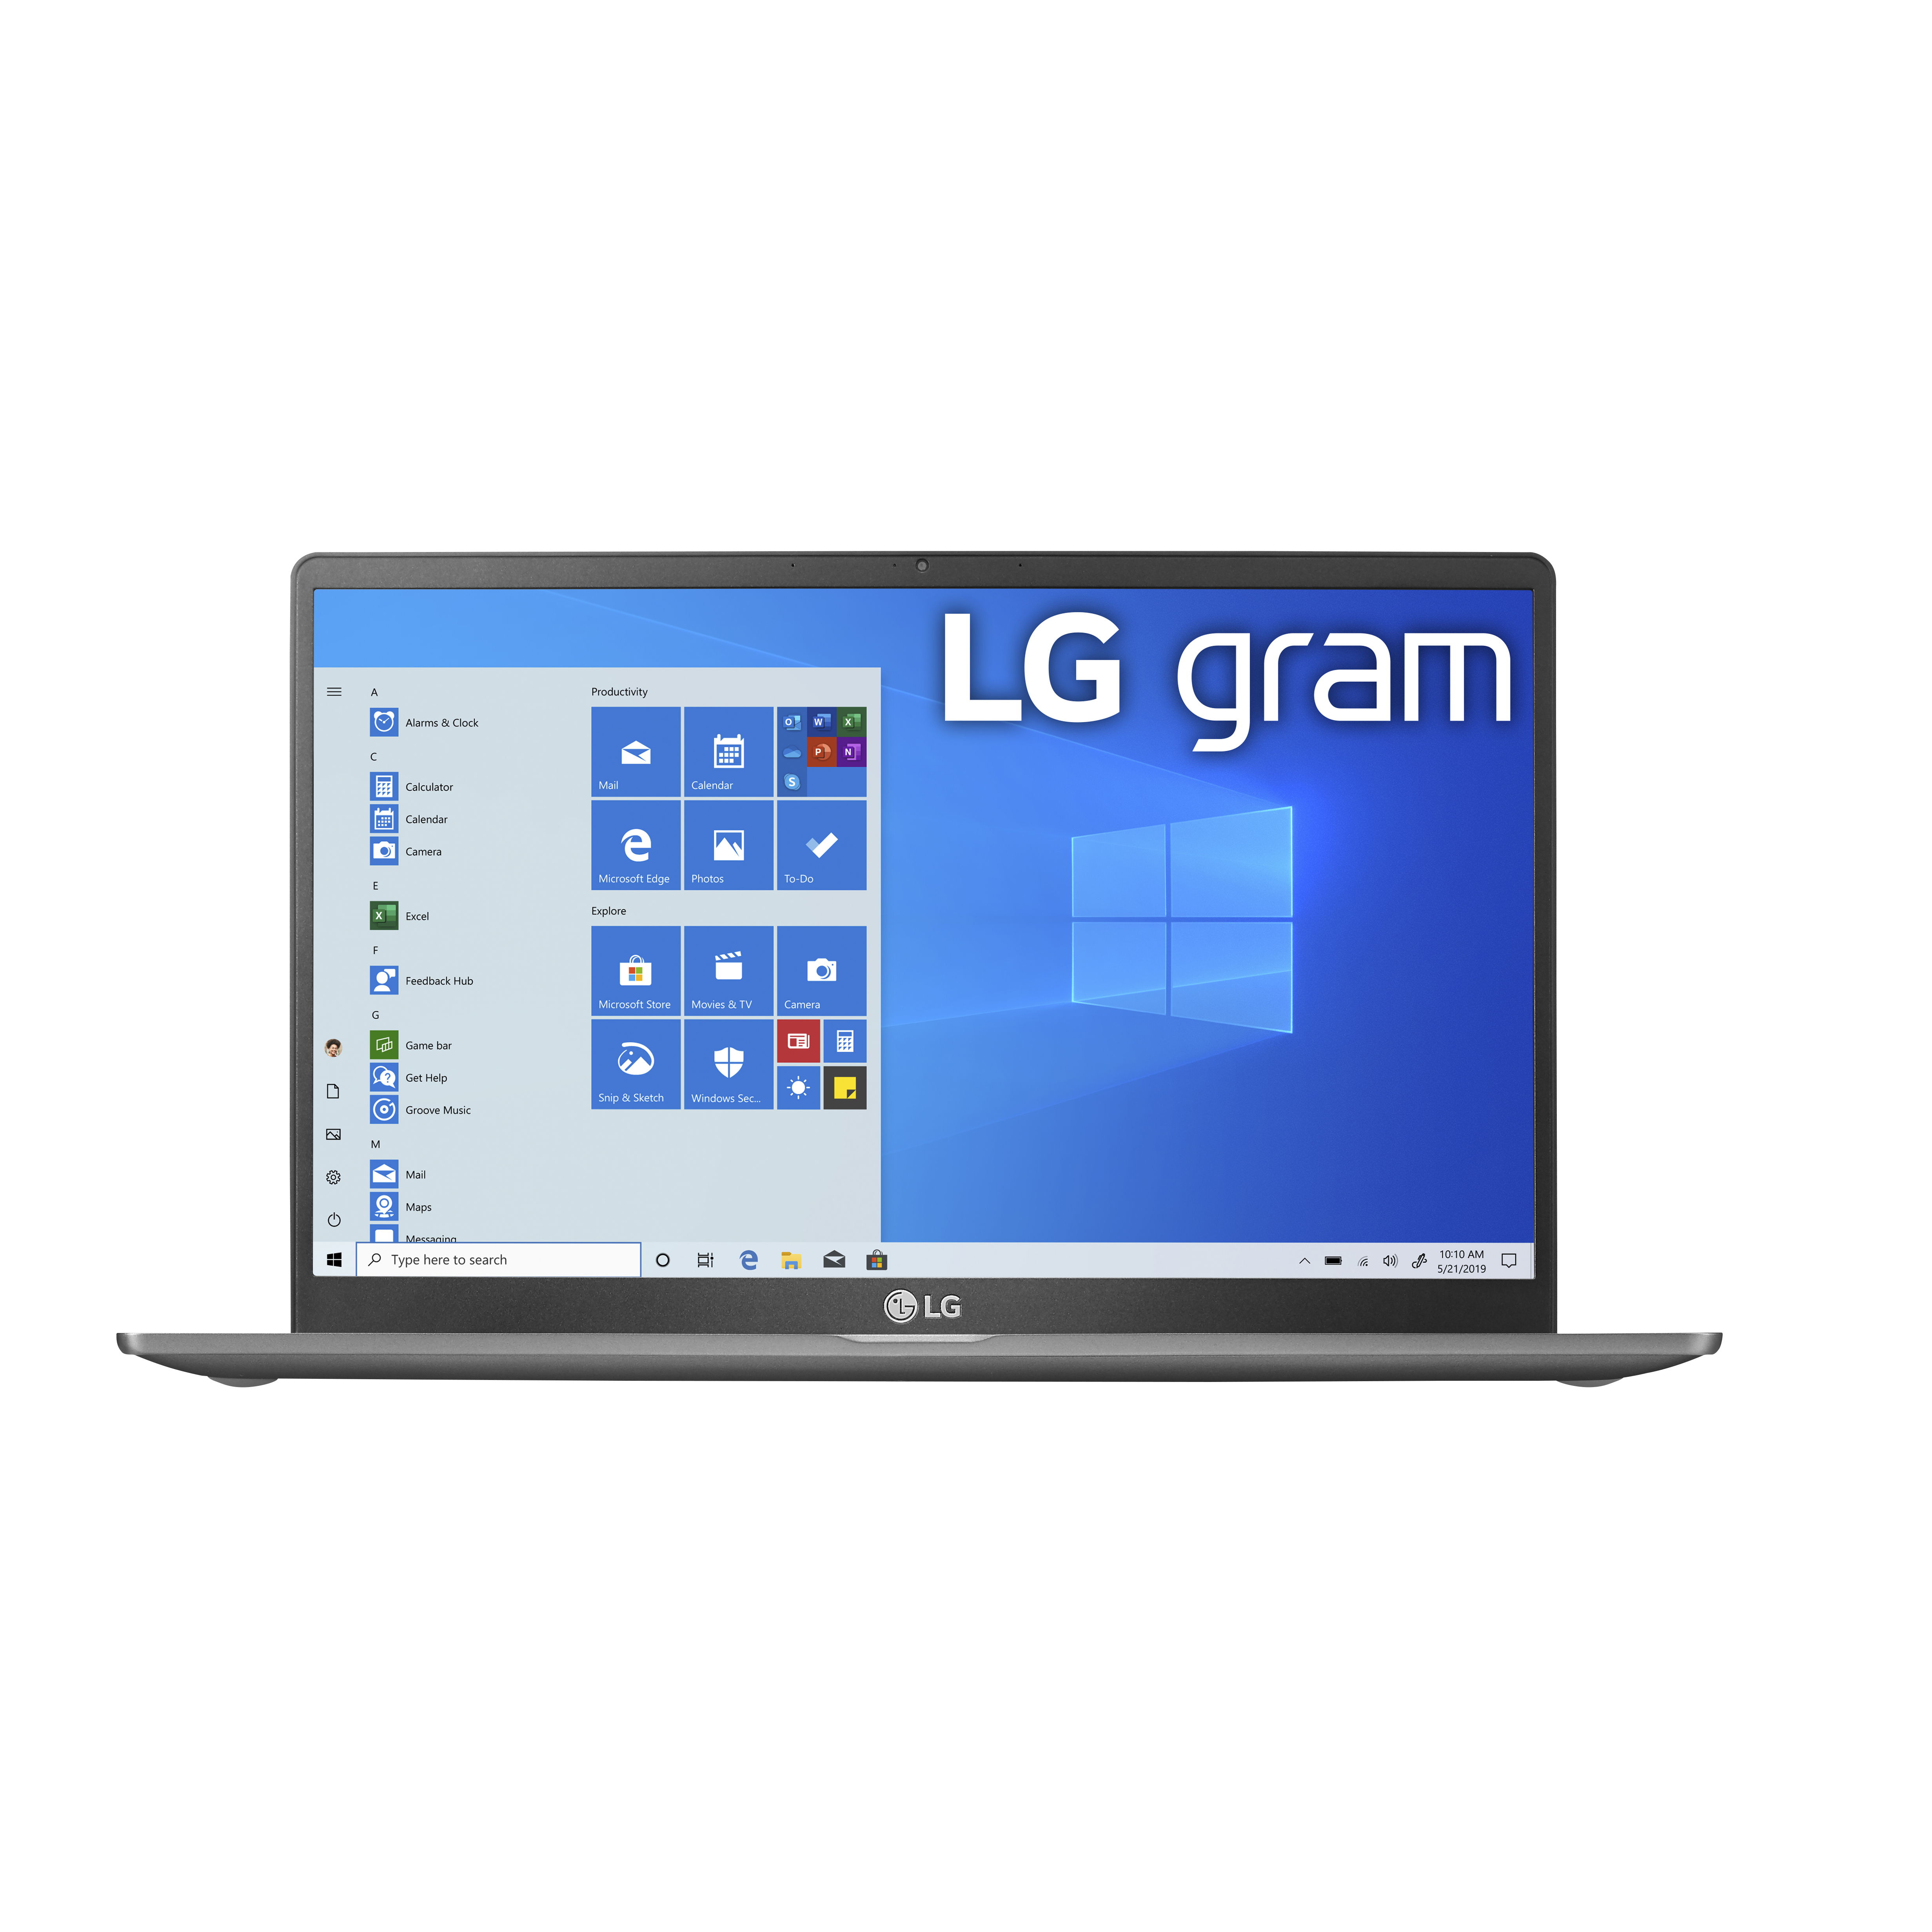 LG gram 14 inch Ultra-Lightweight Laptop with 10th Gen Intel Core Processor w/Intel Iris Plus - 14Z90N-U.AAS7U1 - image 4 of 13